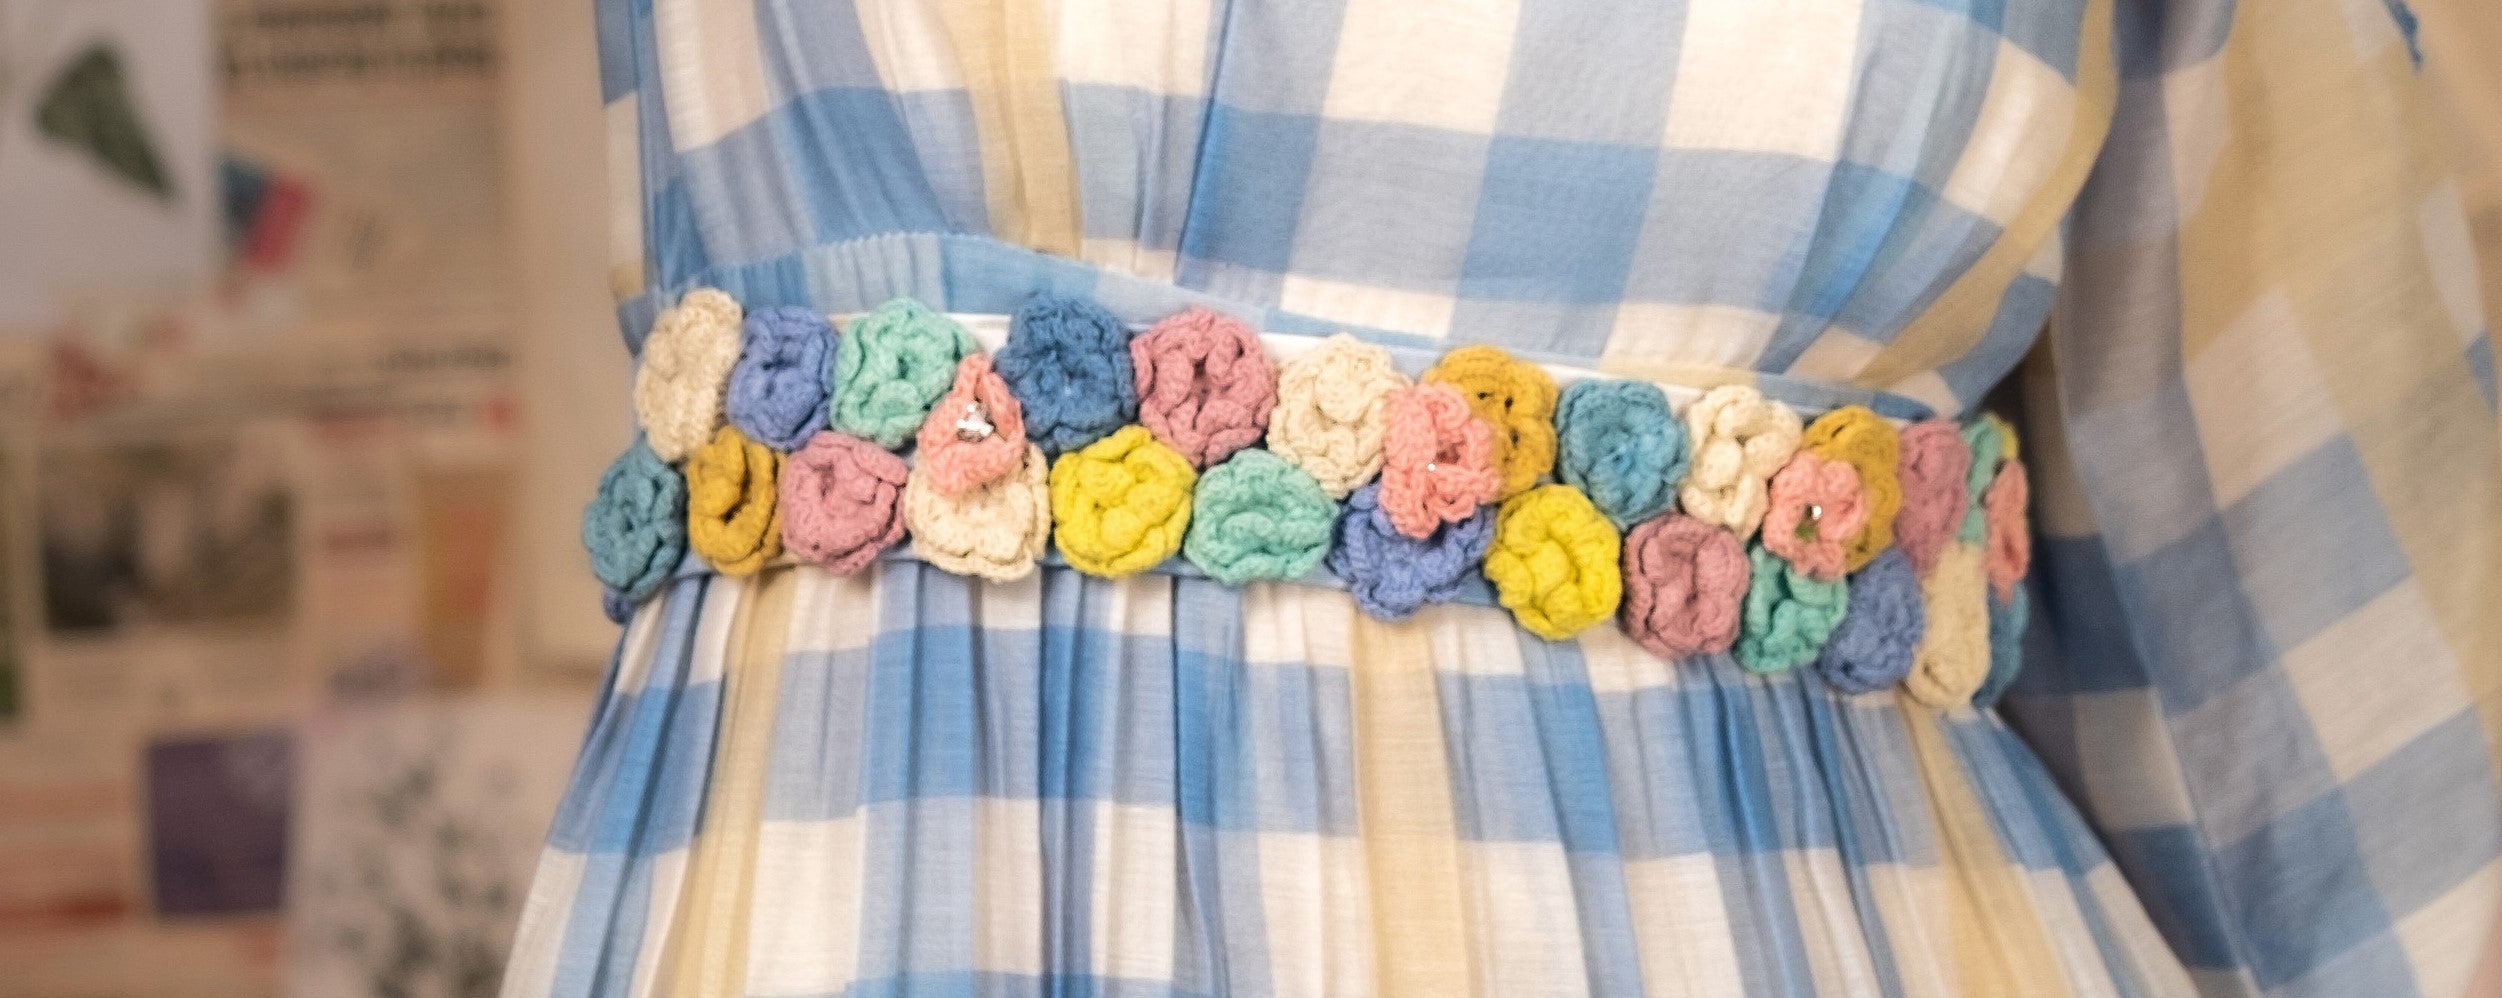 Crochete Belt - Muiticolor